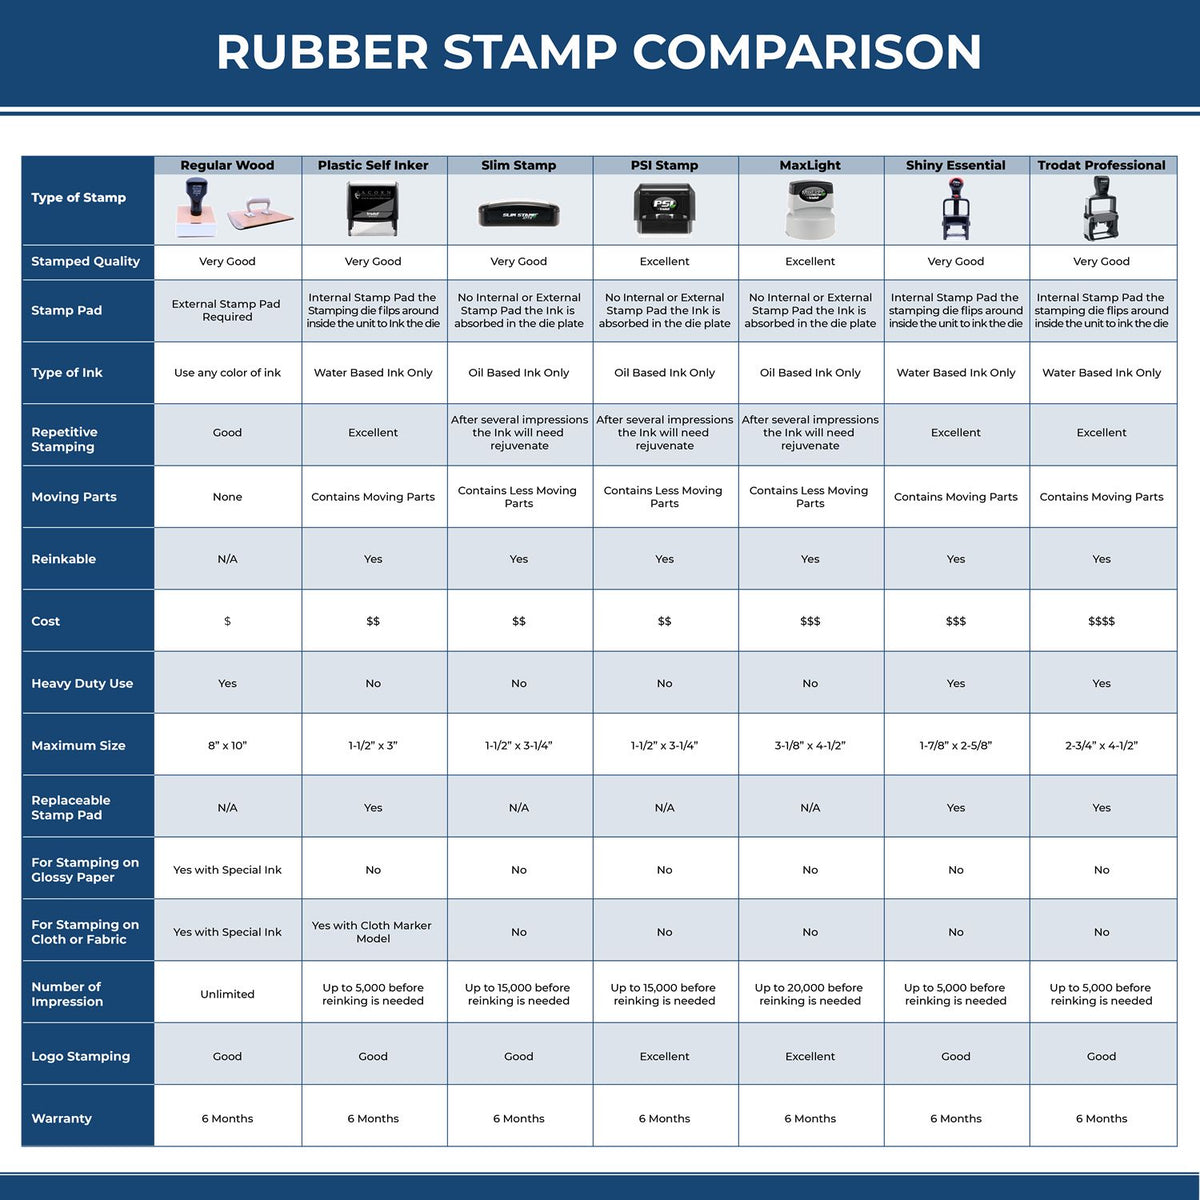 School Property Rubber Stamp 4372R Rubber Stamp Comparison